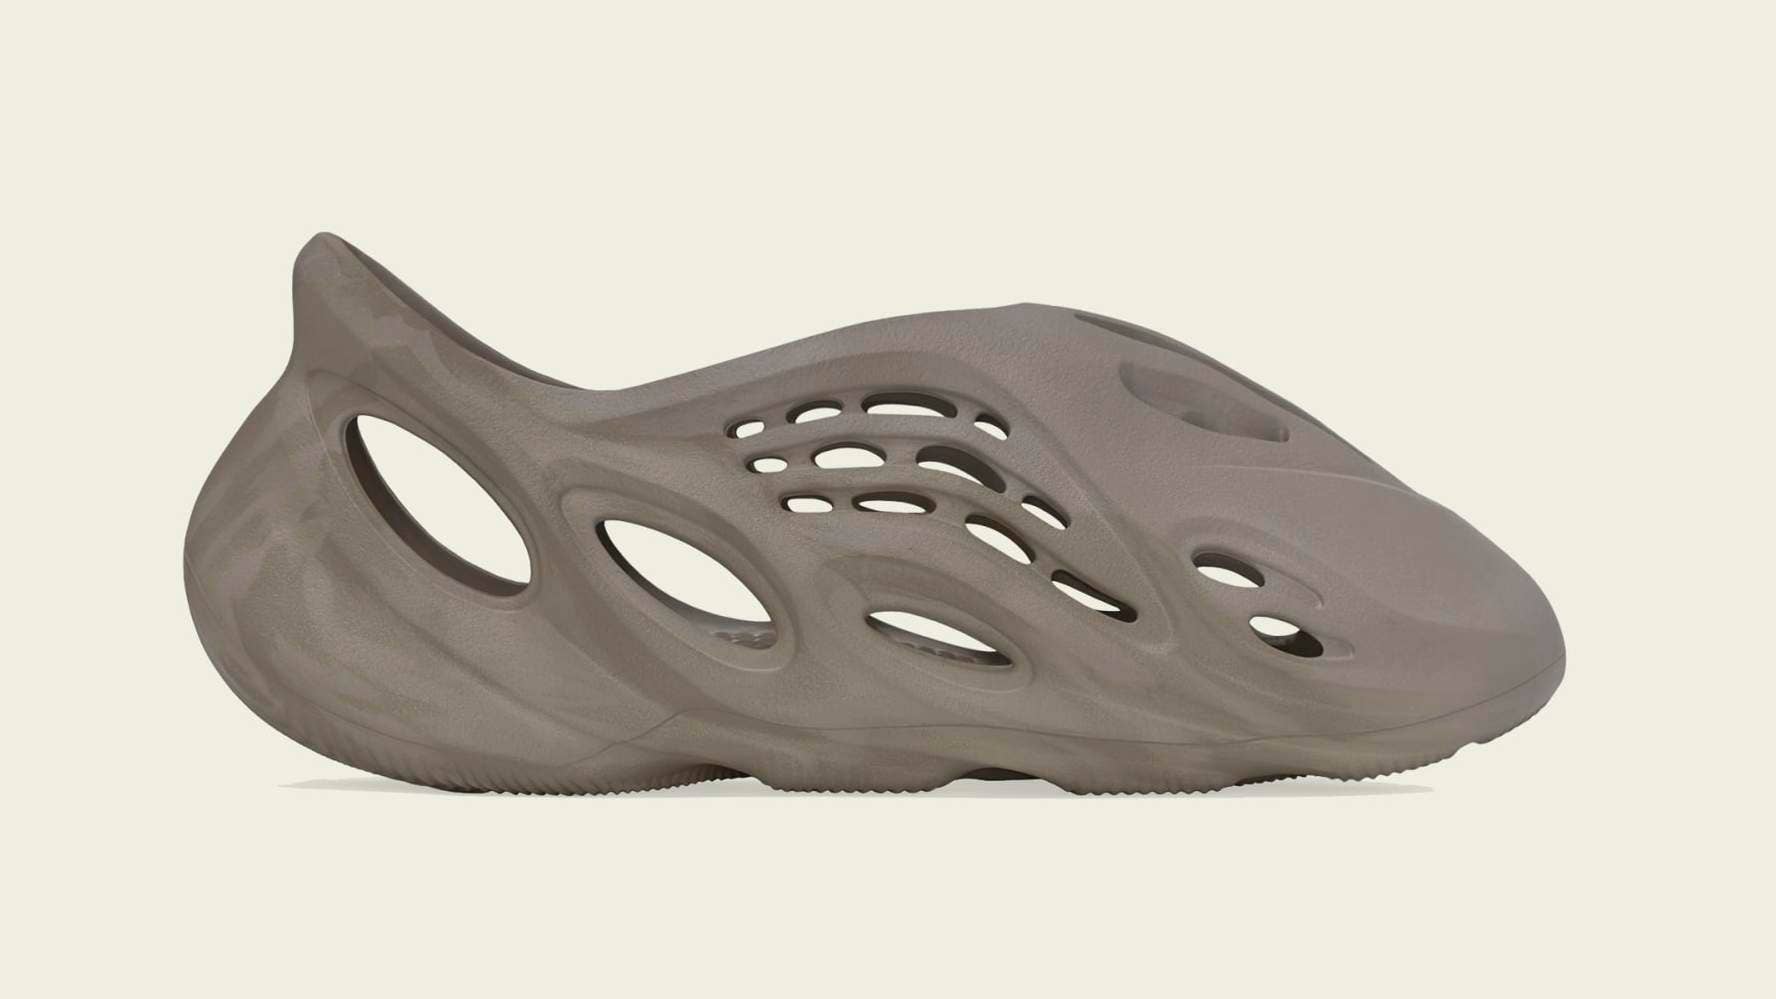 Adidas Yeezy Foam Runner 'Stone Sage' GX4472 Lateral